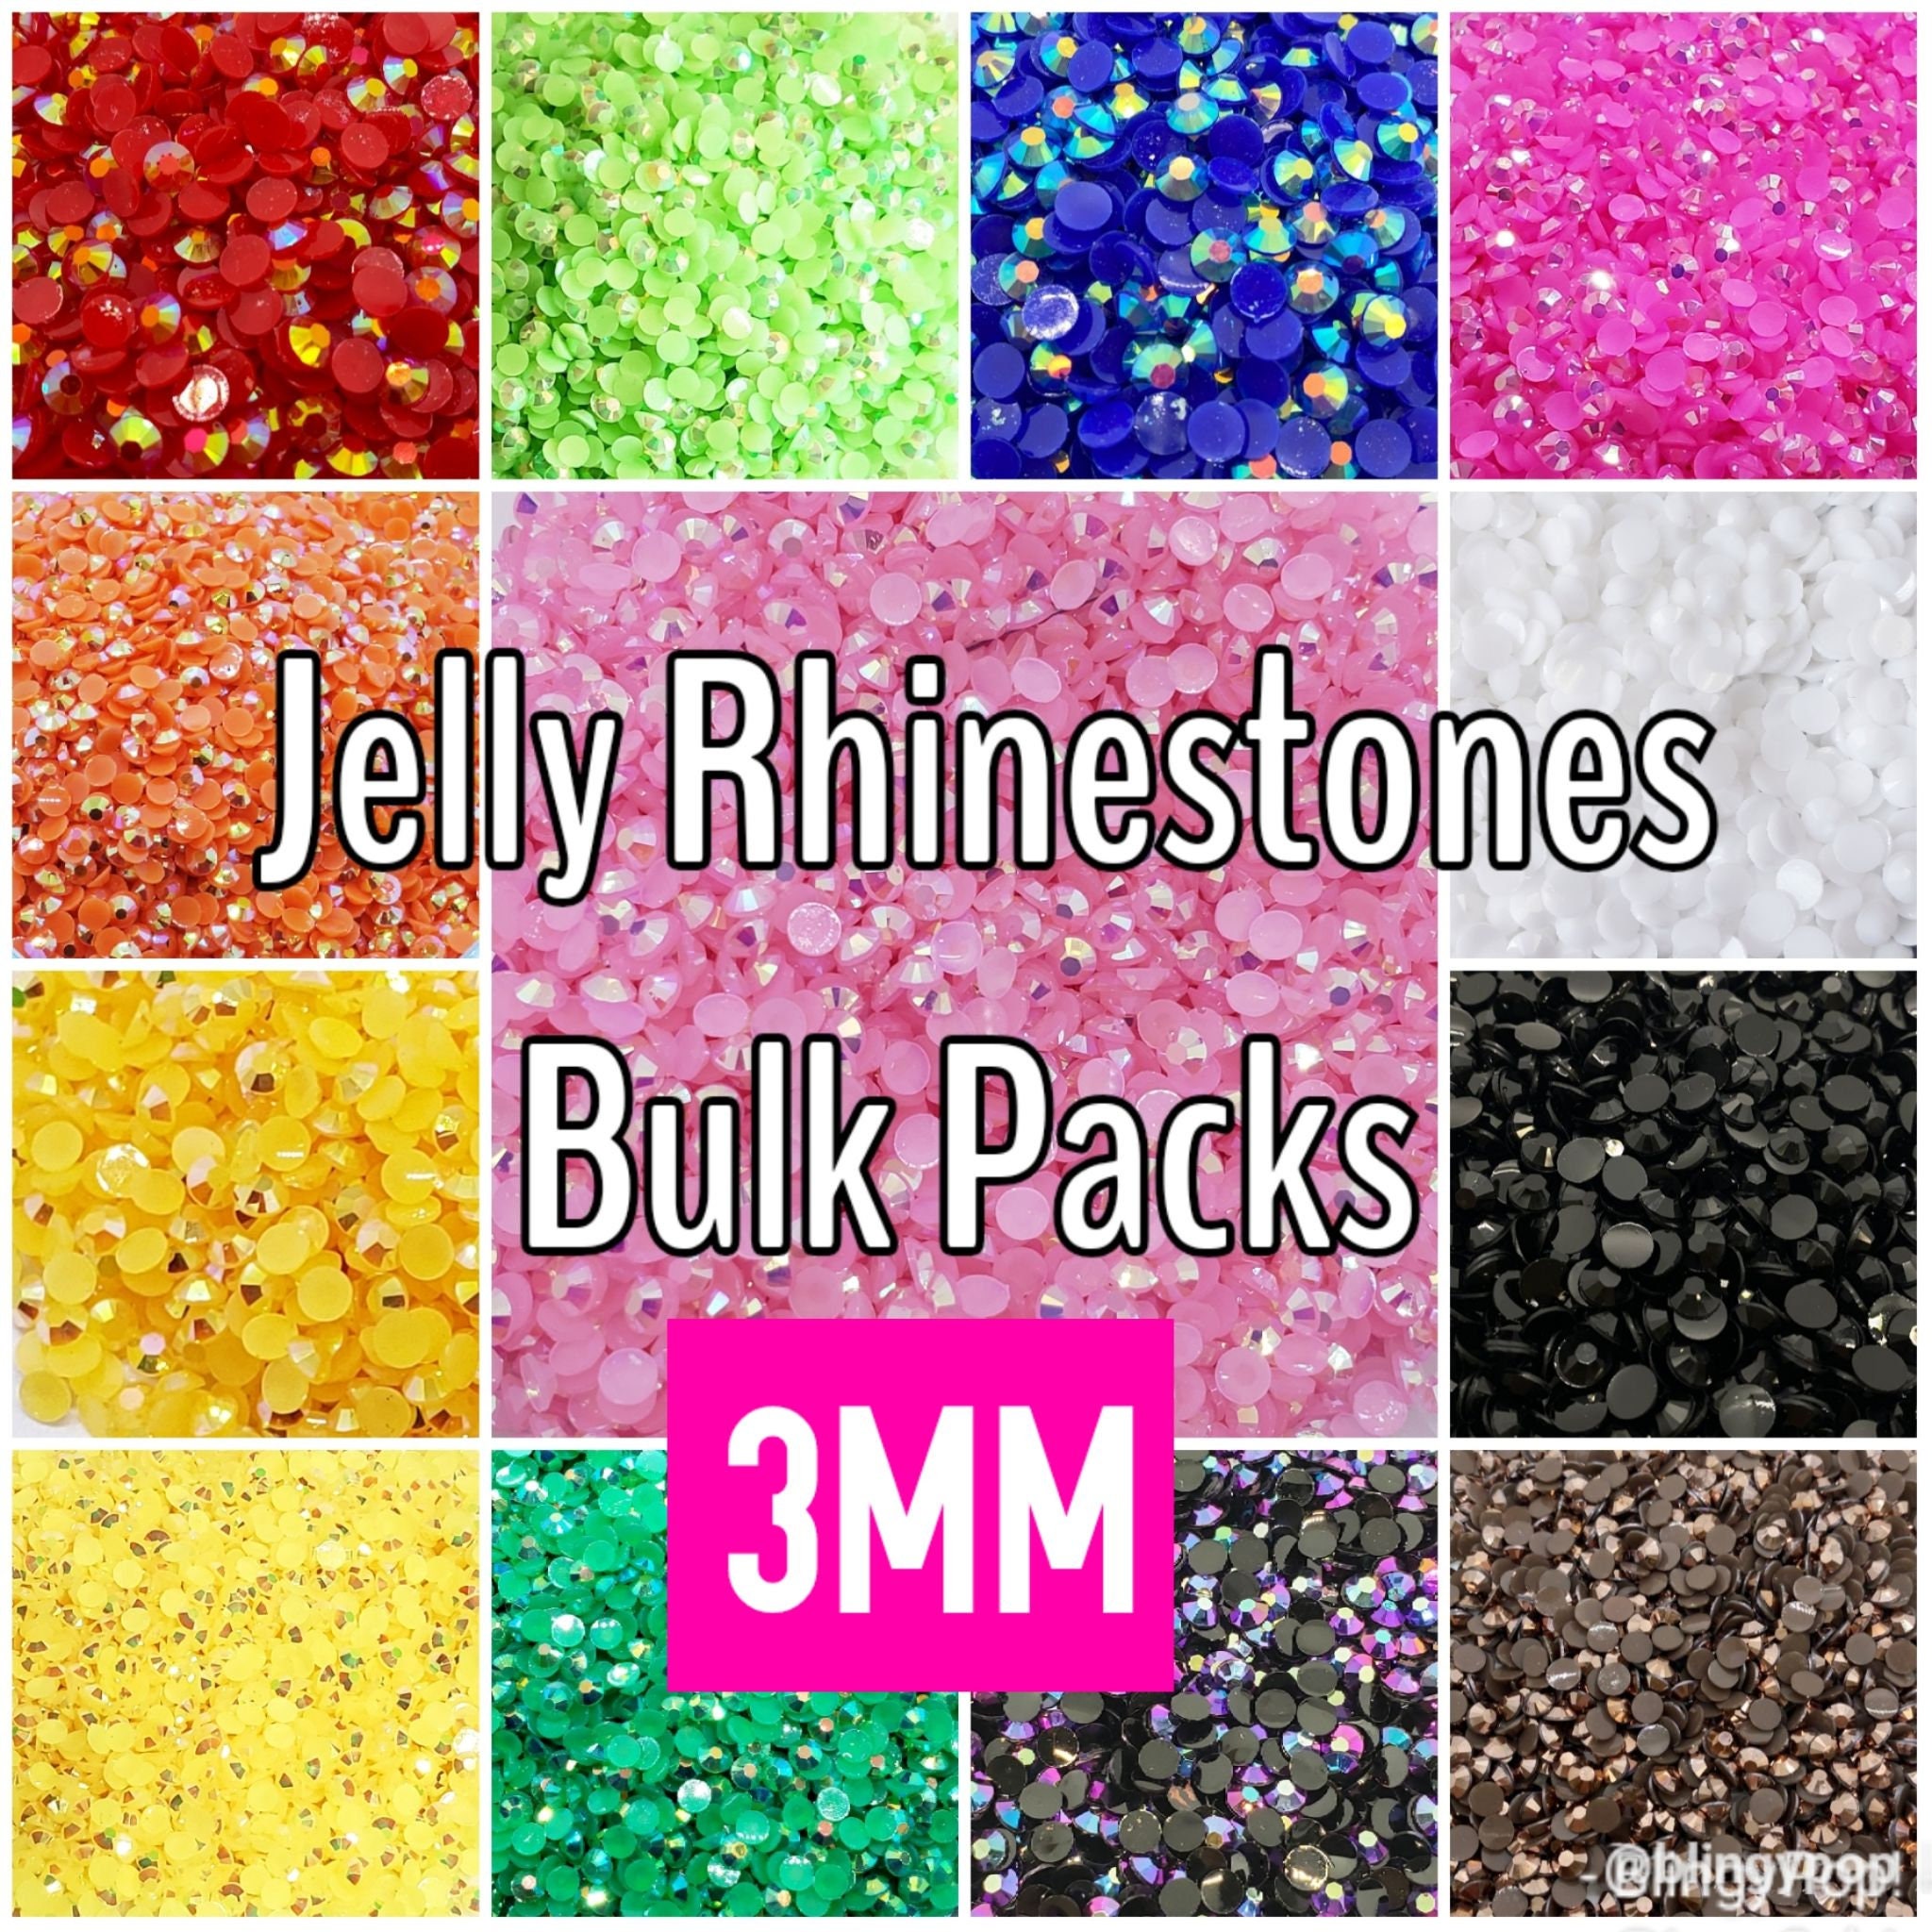 3MM BULK BAGS 5000 Pcs Jelly Rhinestones Non Hotfix Embellishments